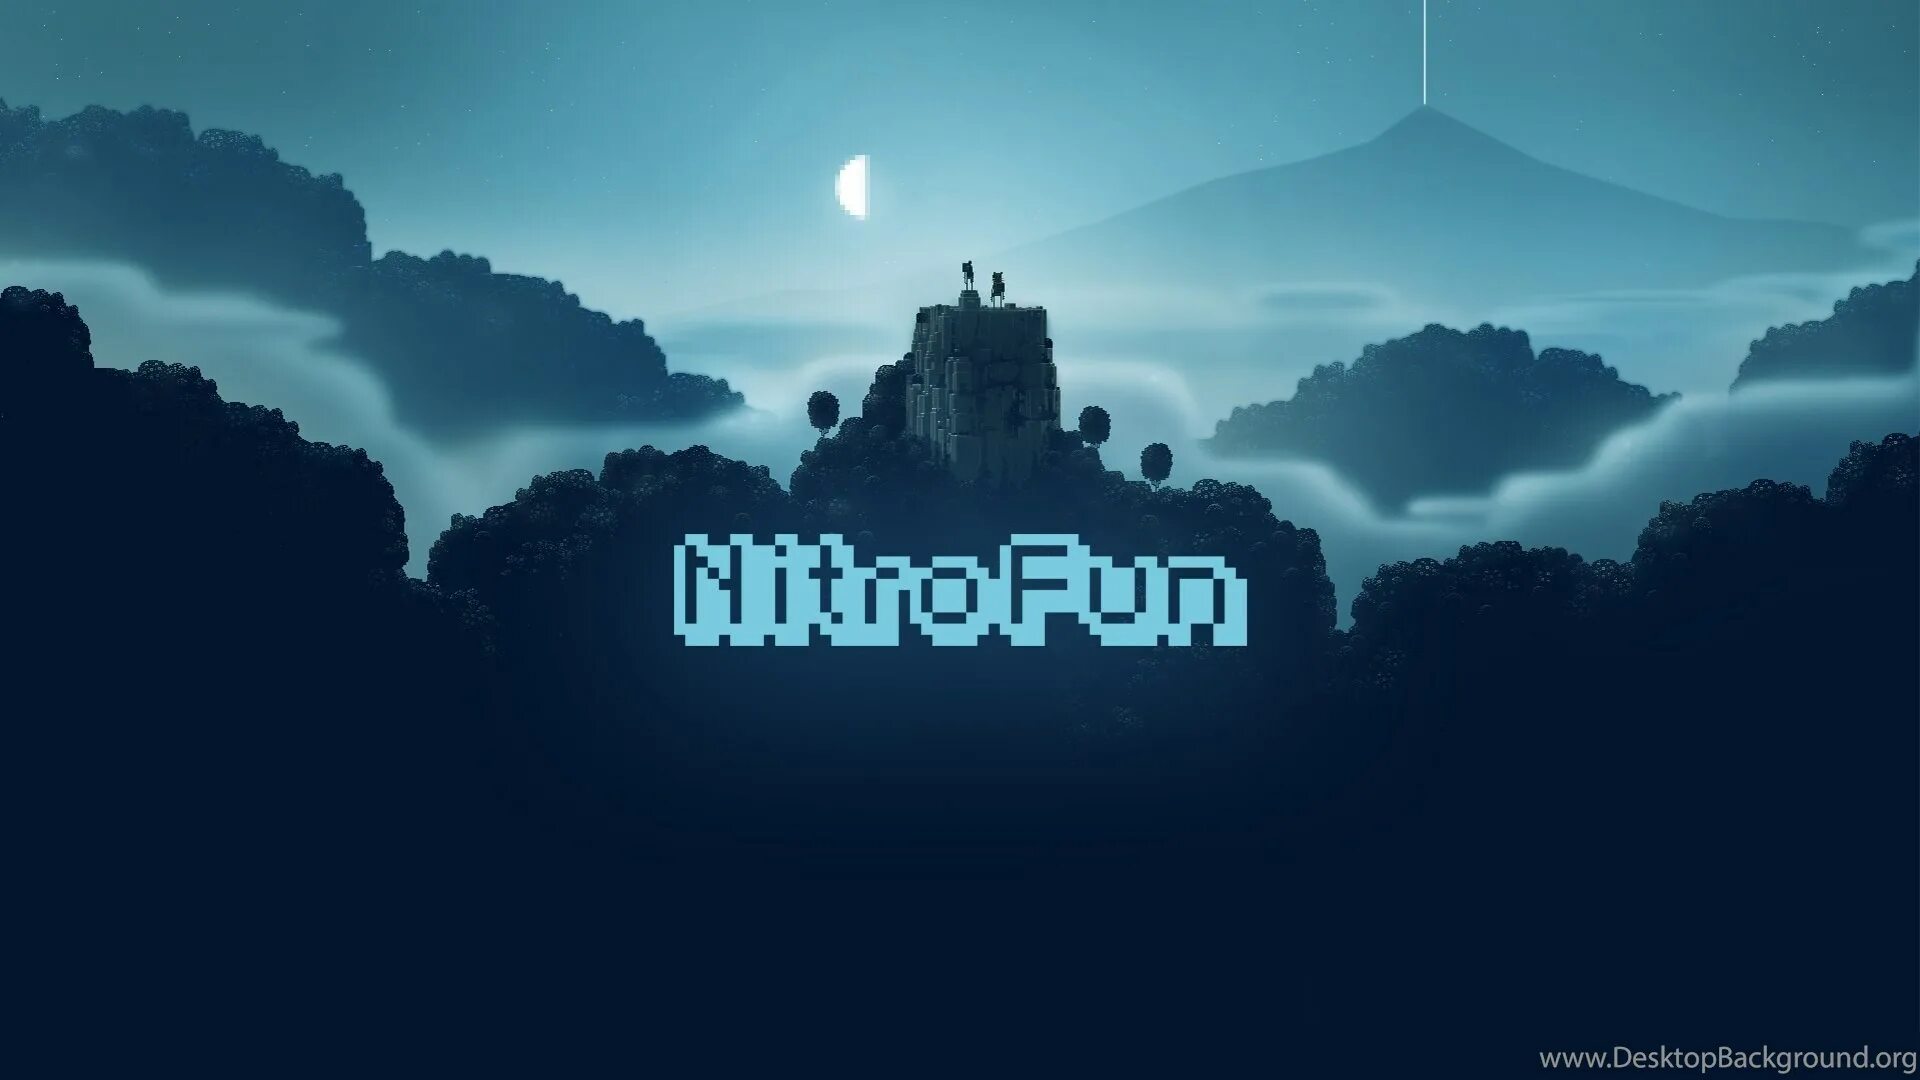 Nitro fun. Nitro fun Cheat codes. Nitro fun mindbreak. Nitro fun Wiki. Заставка Nitro.